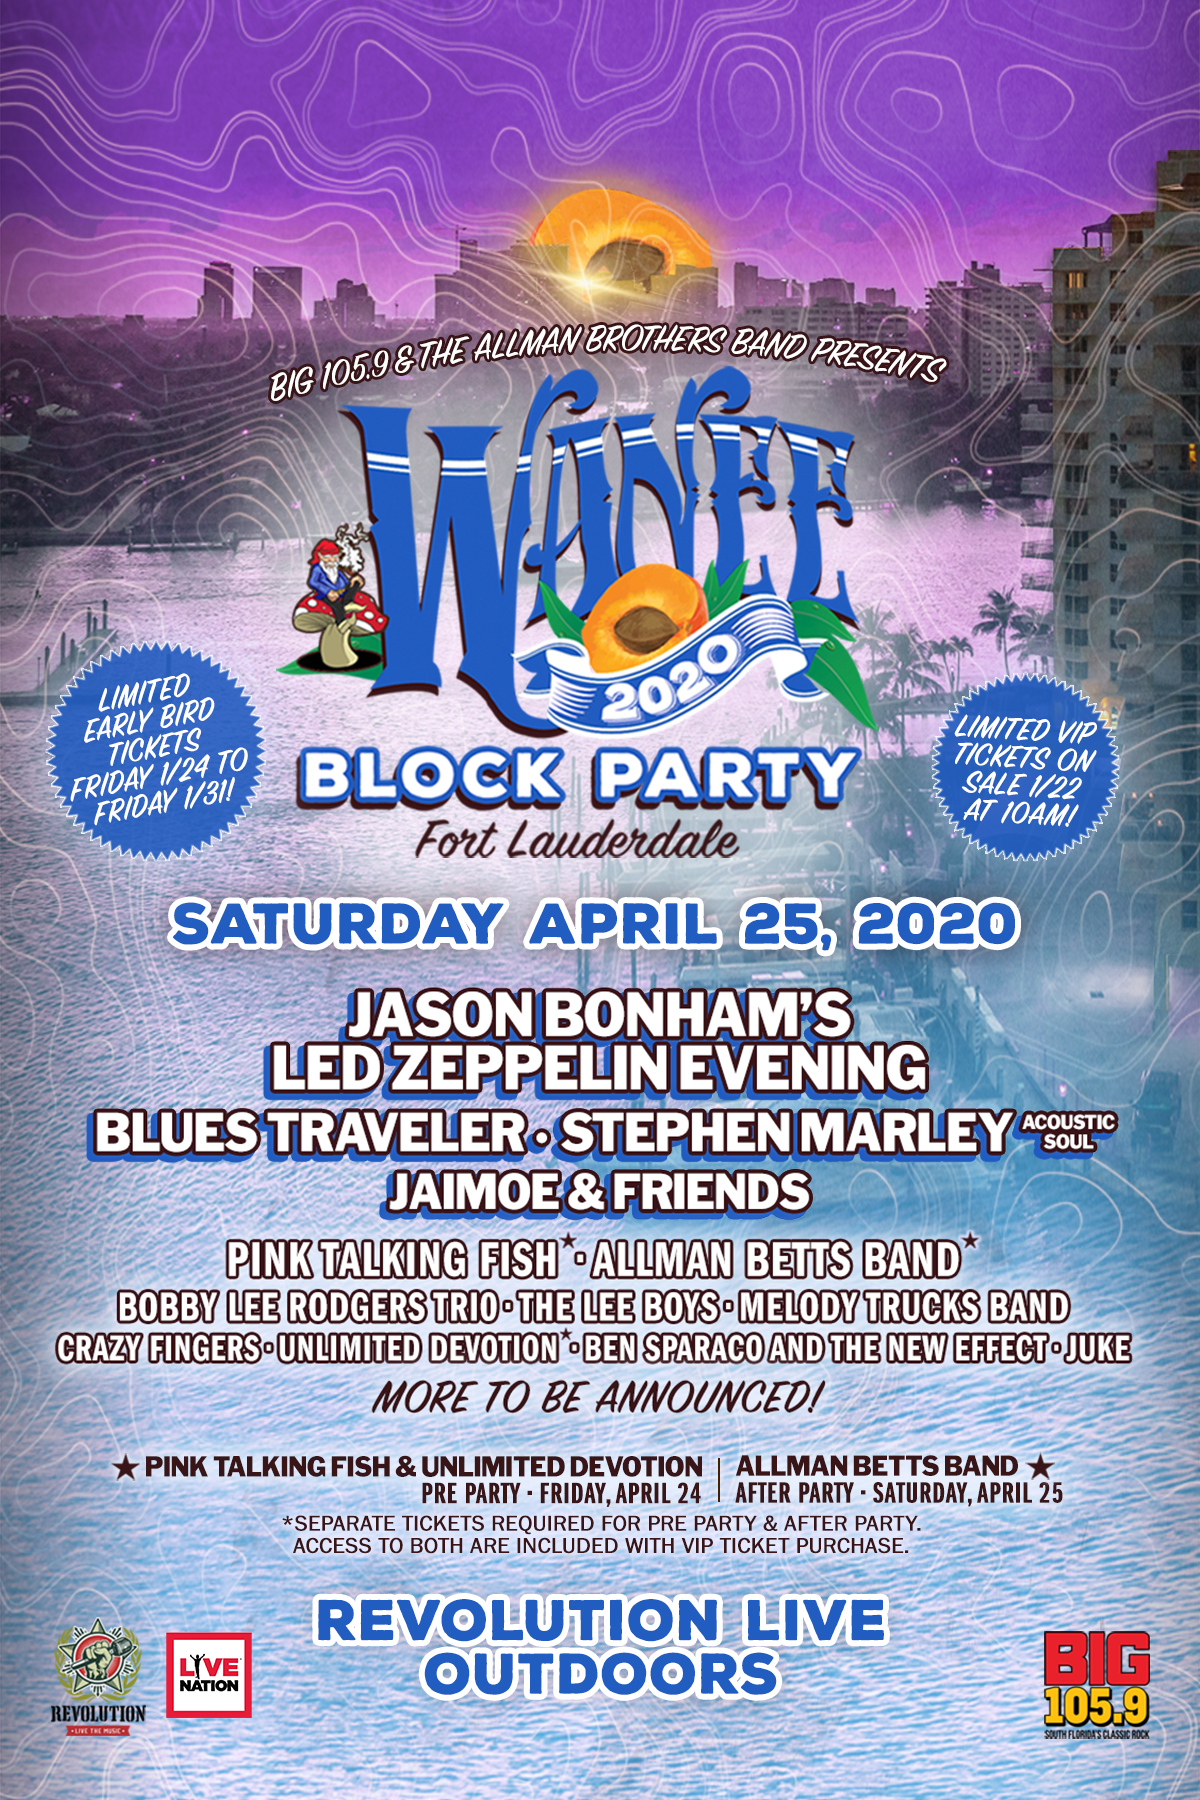 WANEE BLOCK PARTY 2020 Announces Lineup